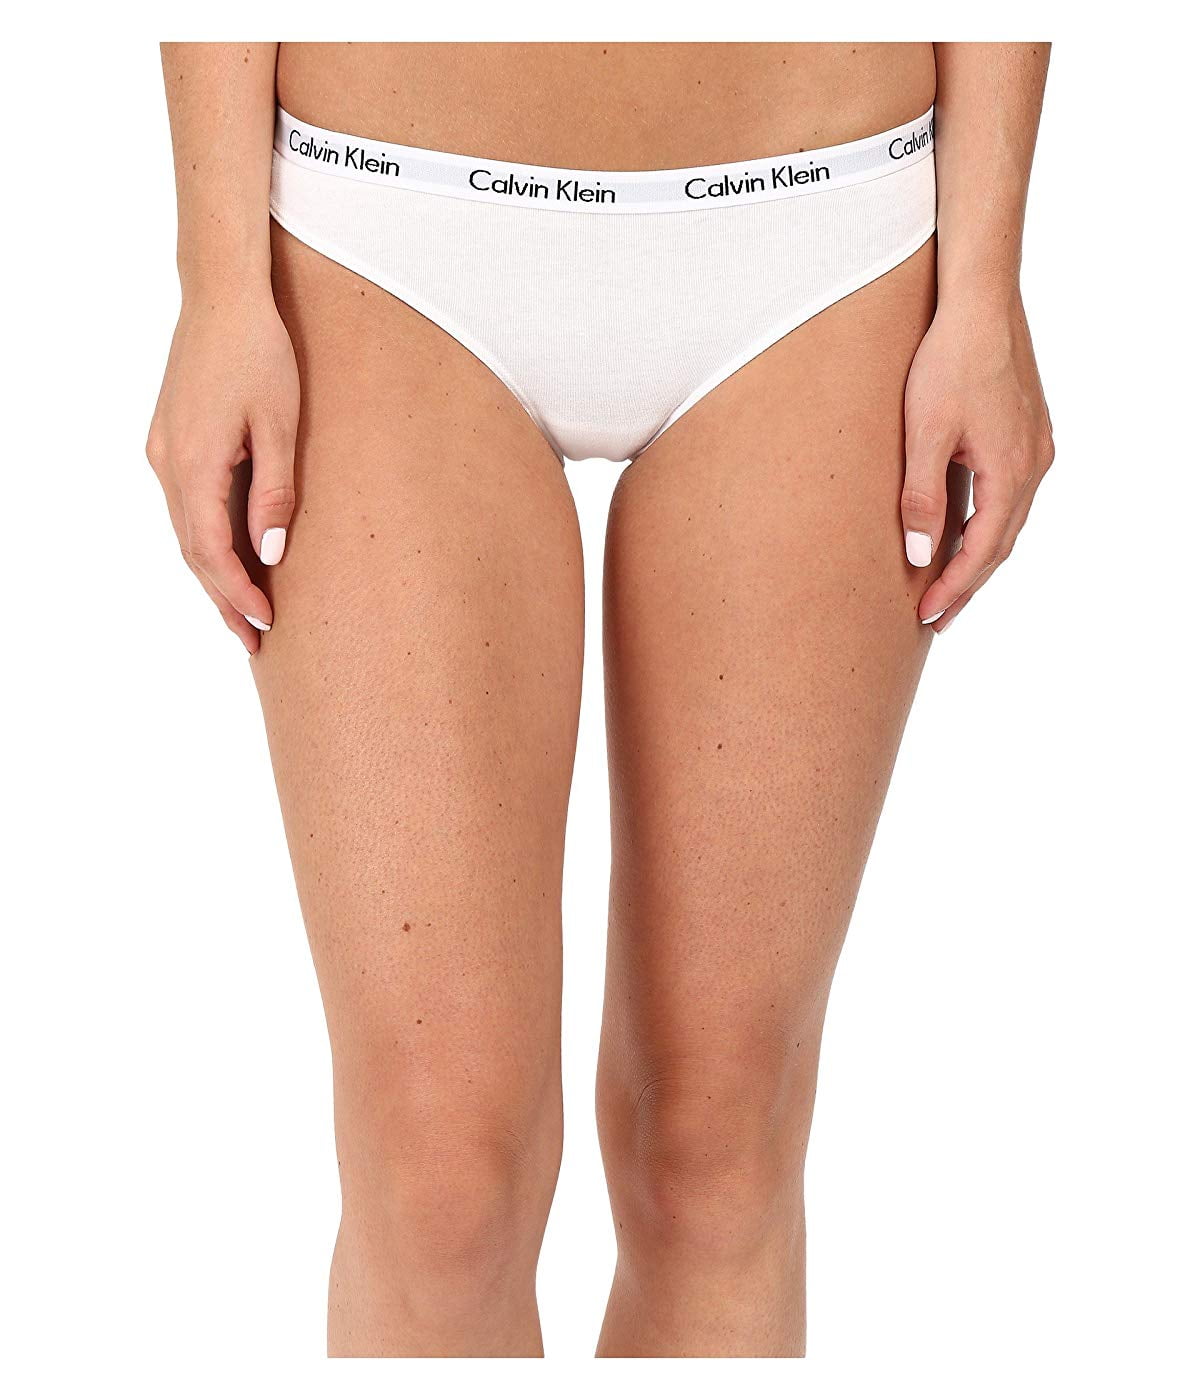 Calvin Klein MULTI Carousel Bikini Panty-3 Pack, US Medium 